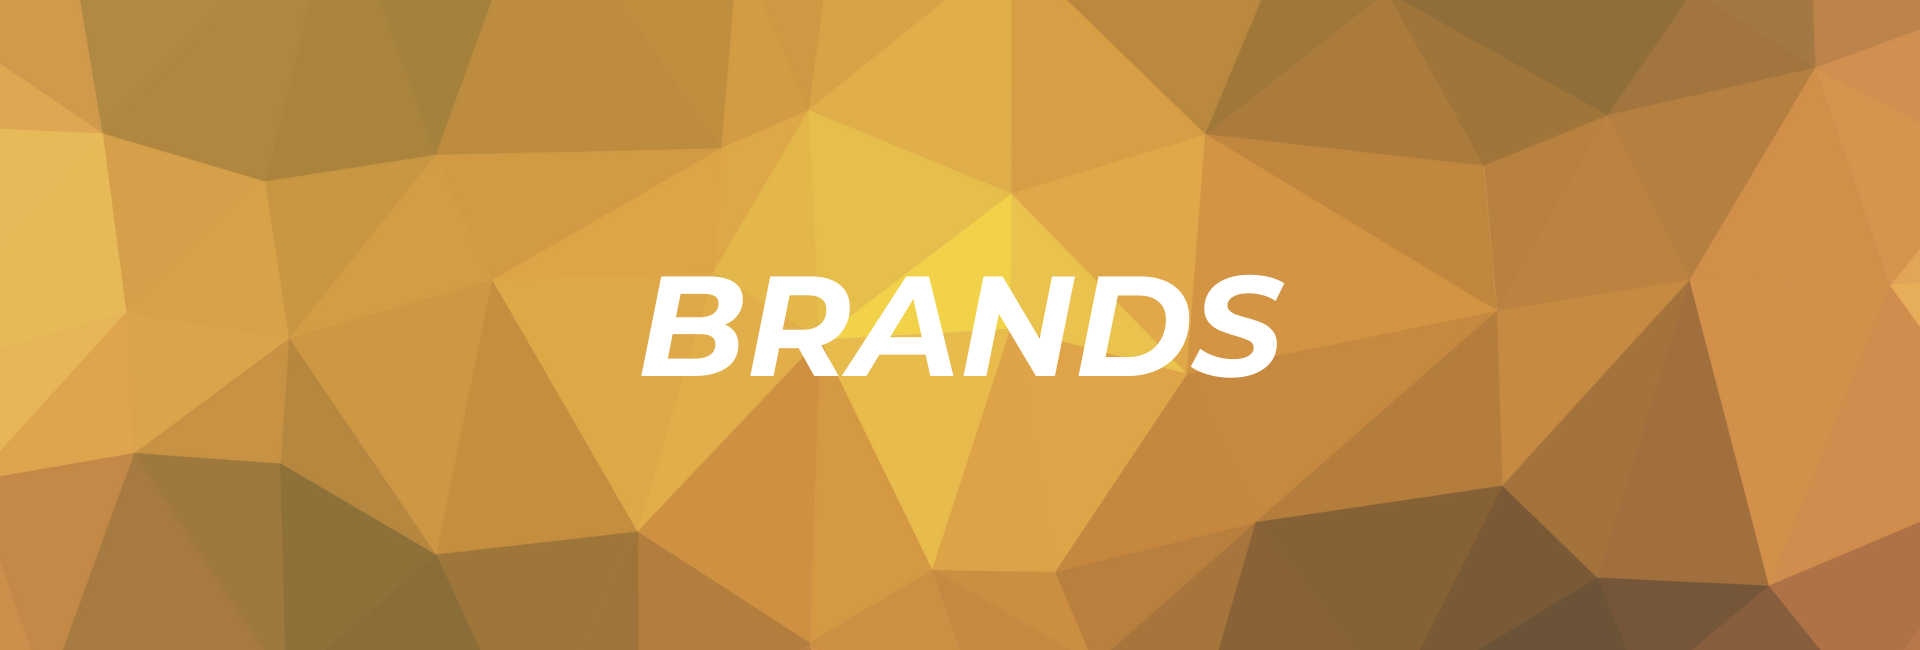 brands-banner